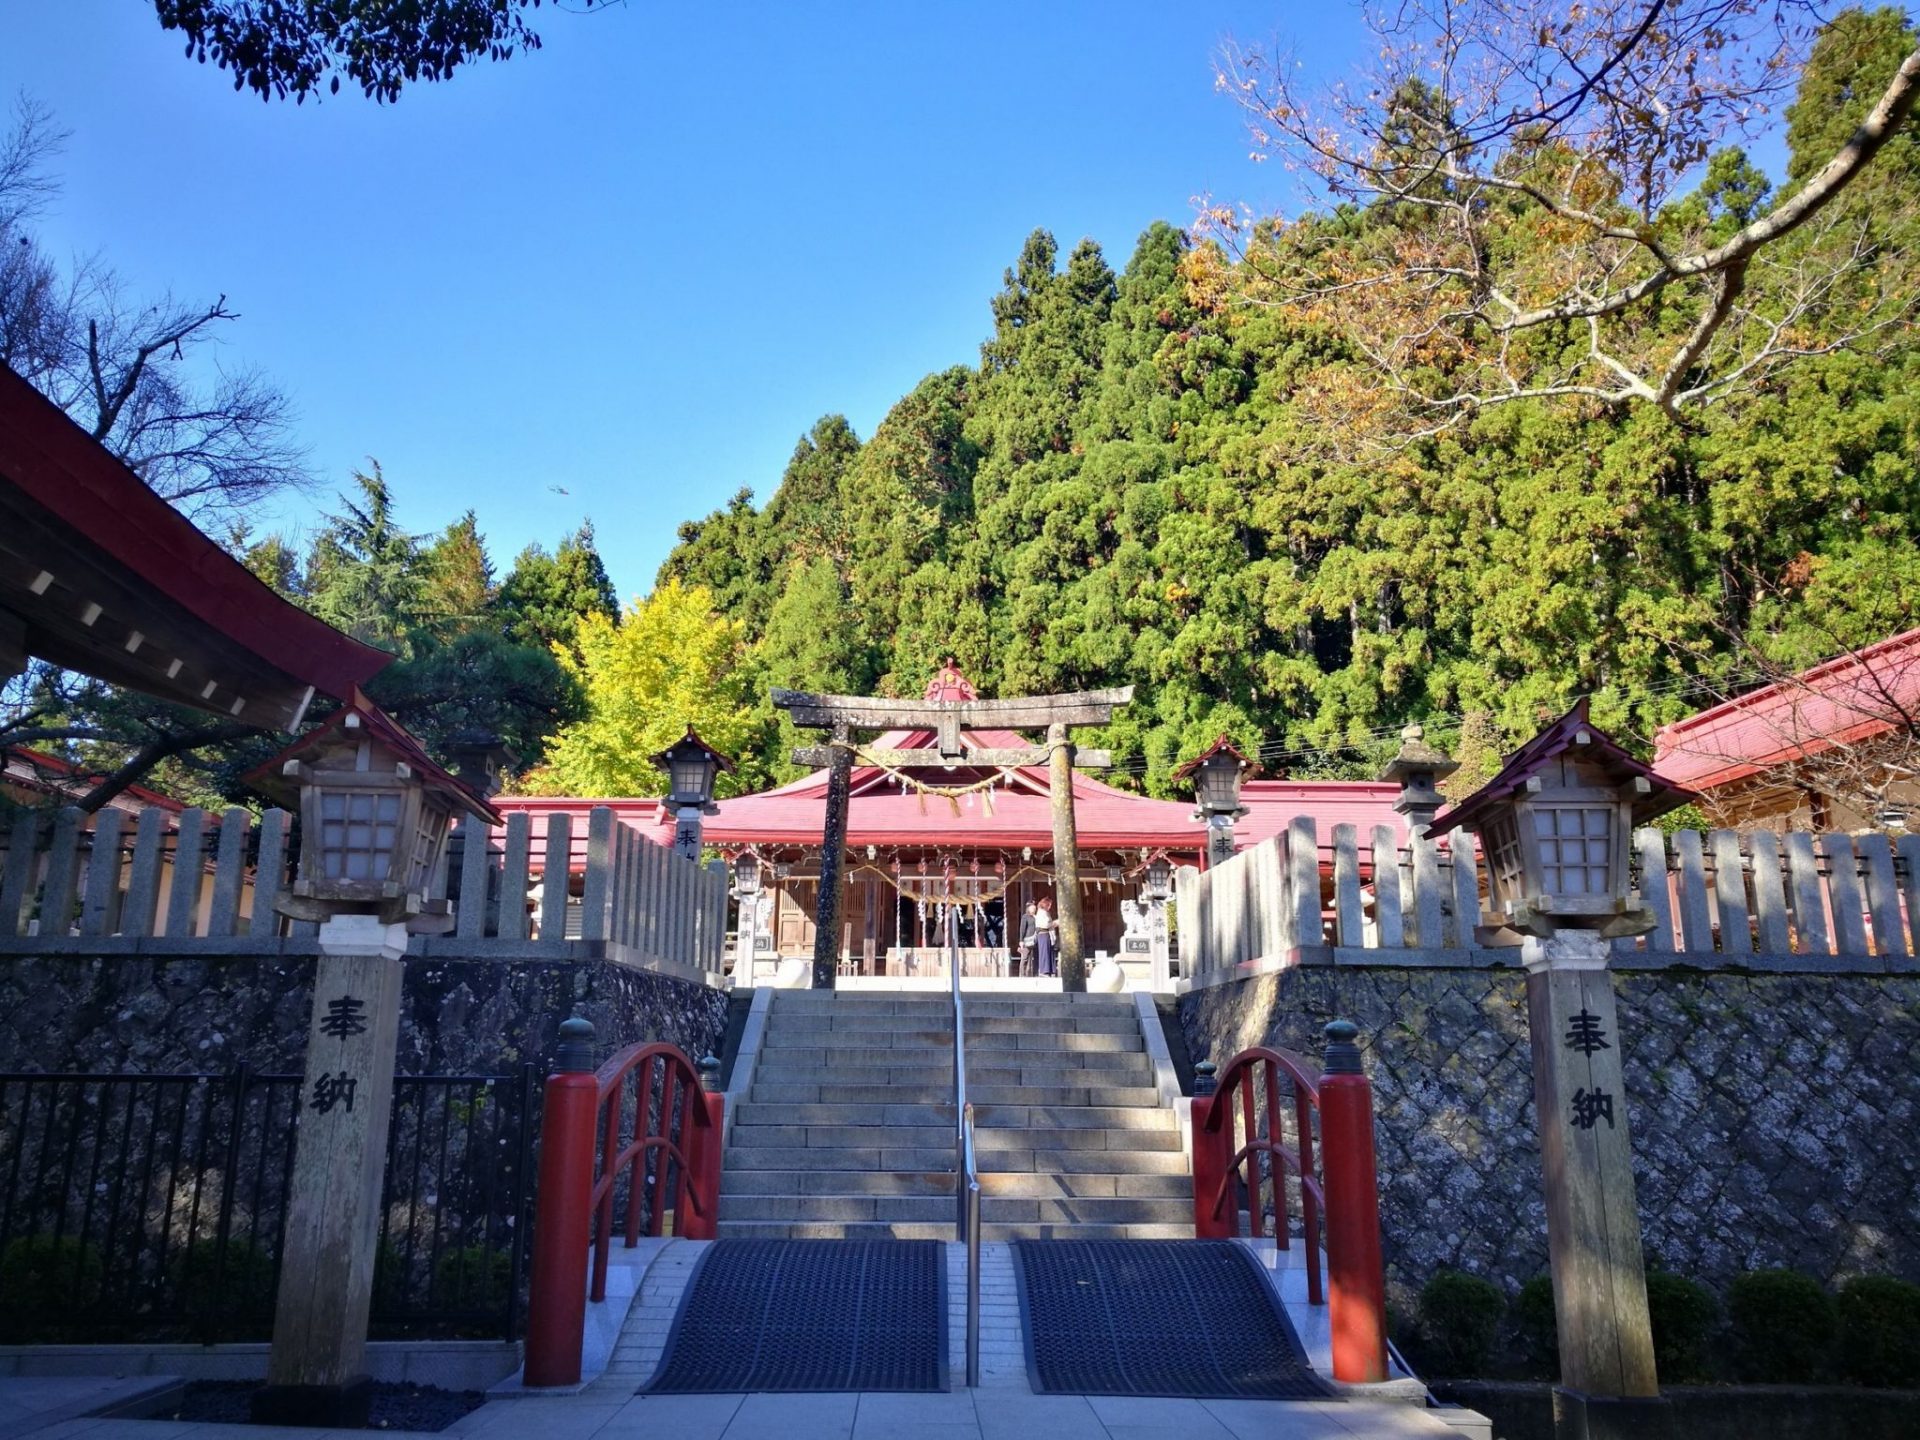 "Praying at Shimizu Shrine and experiencing cooking soba noodles"